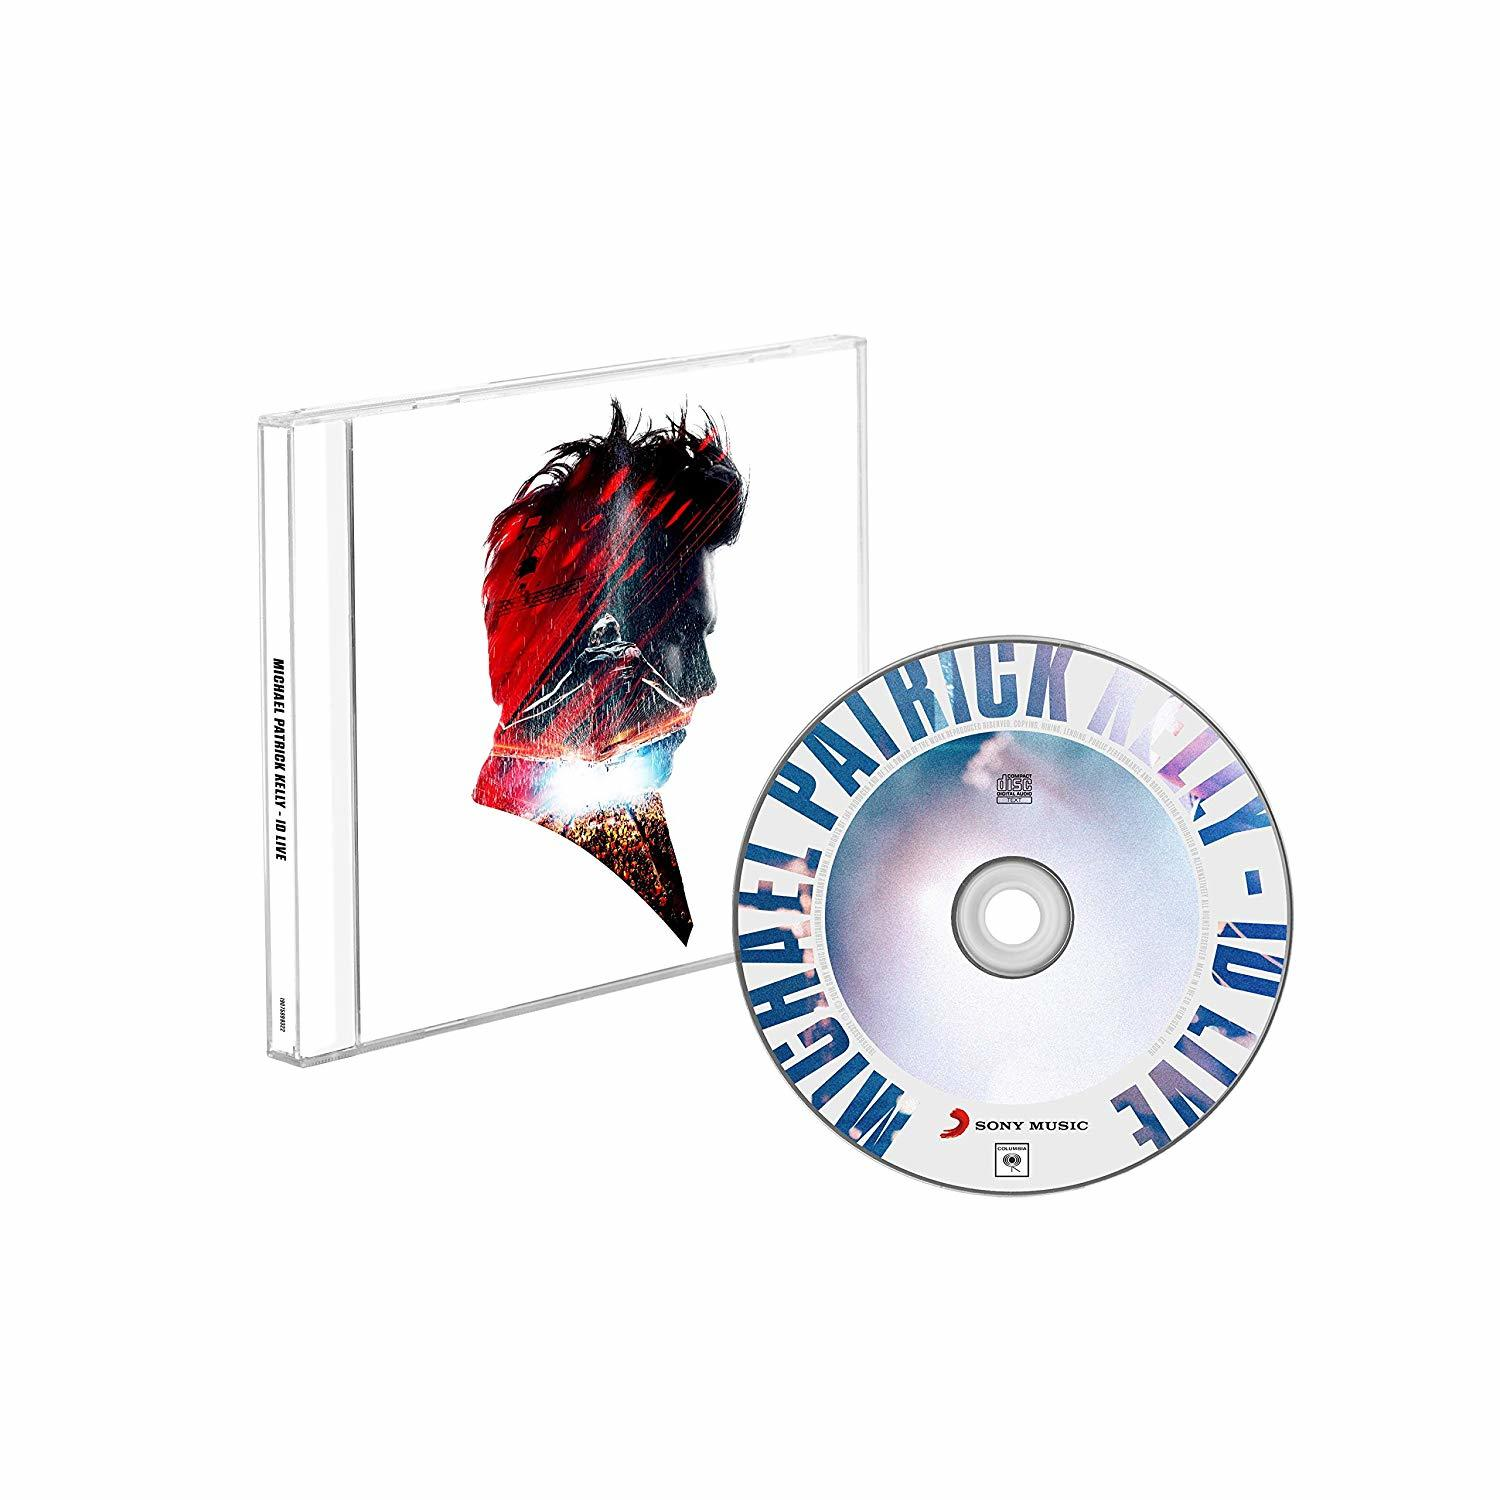 Michael Patrick Kelly - iD - Live - (CD)